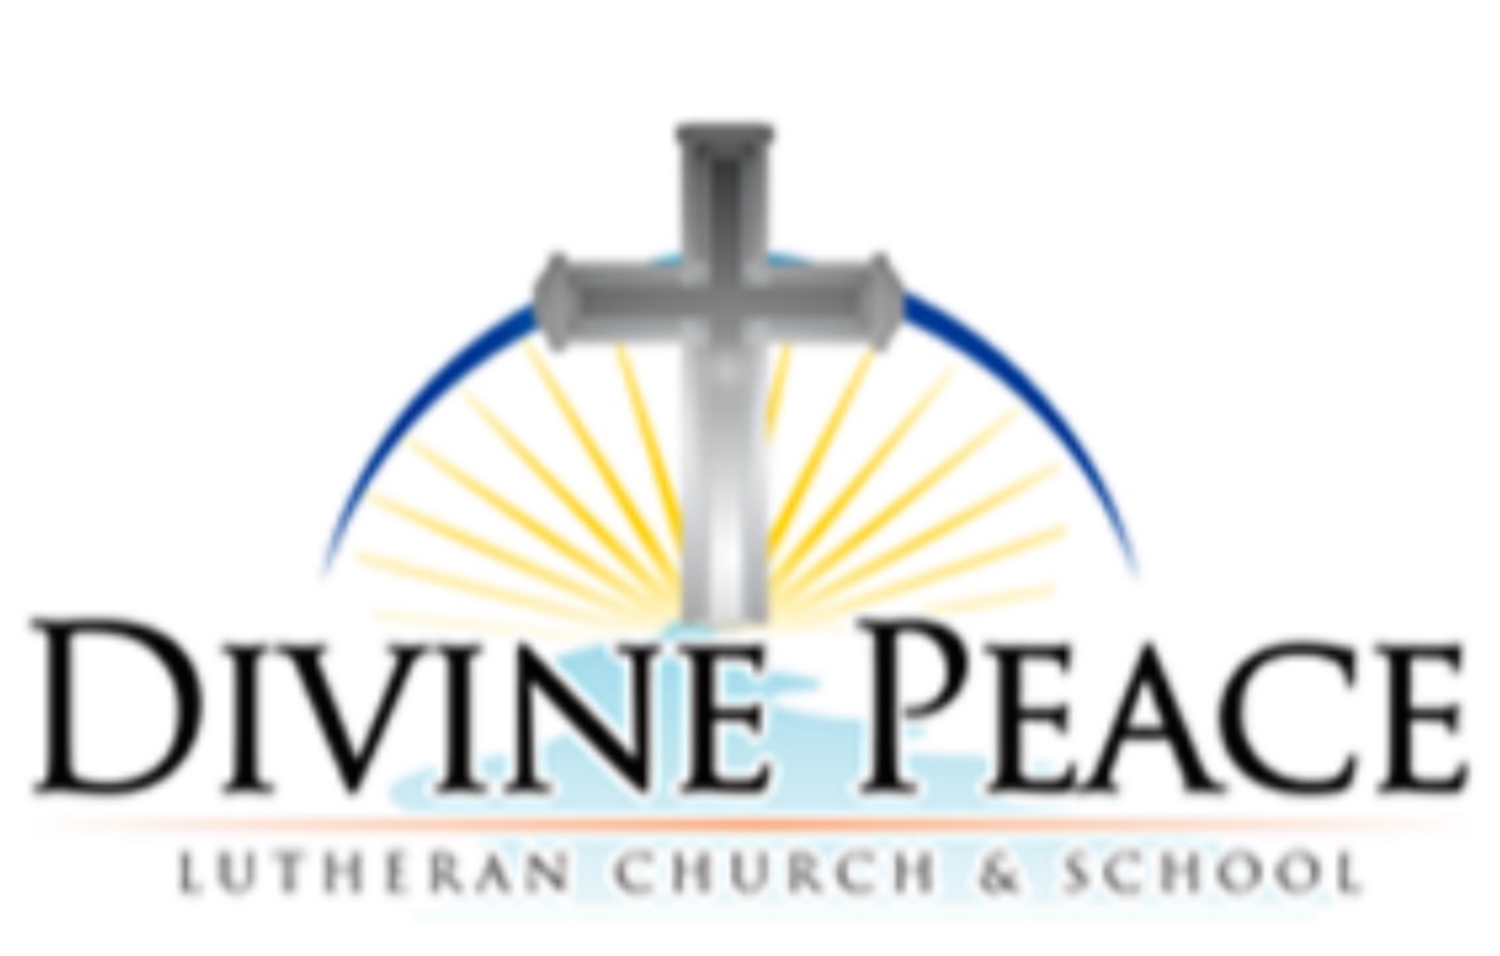 Divine Peace Lutheran Church